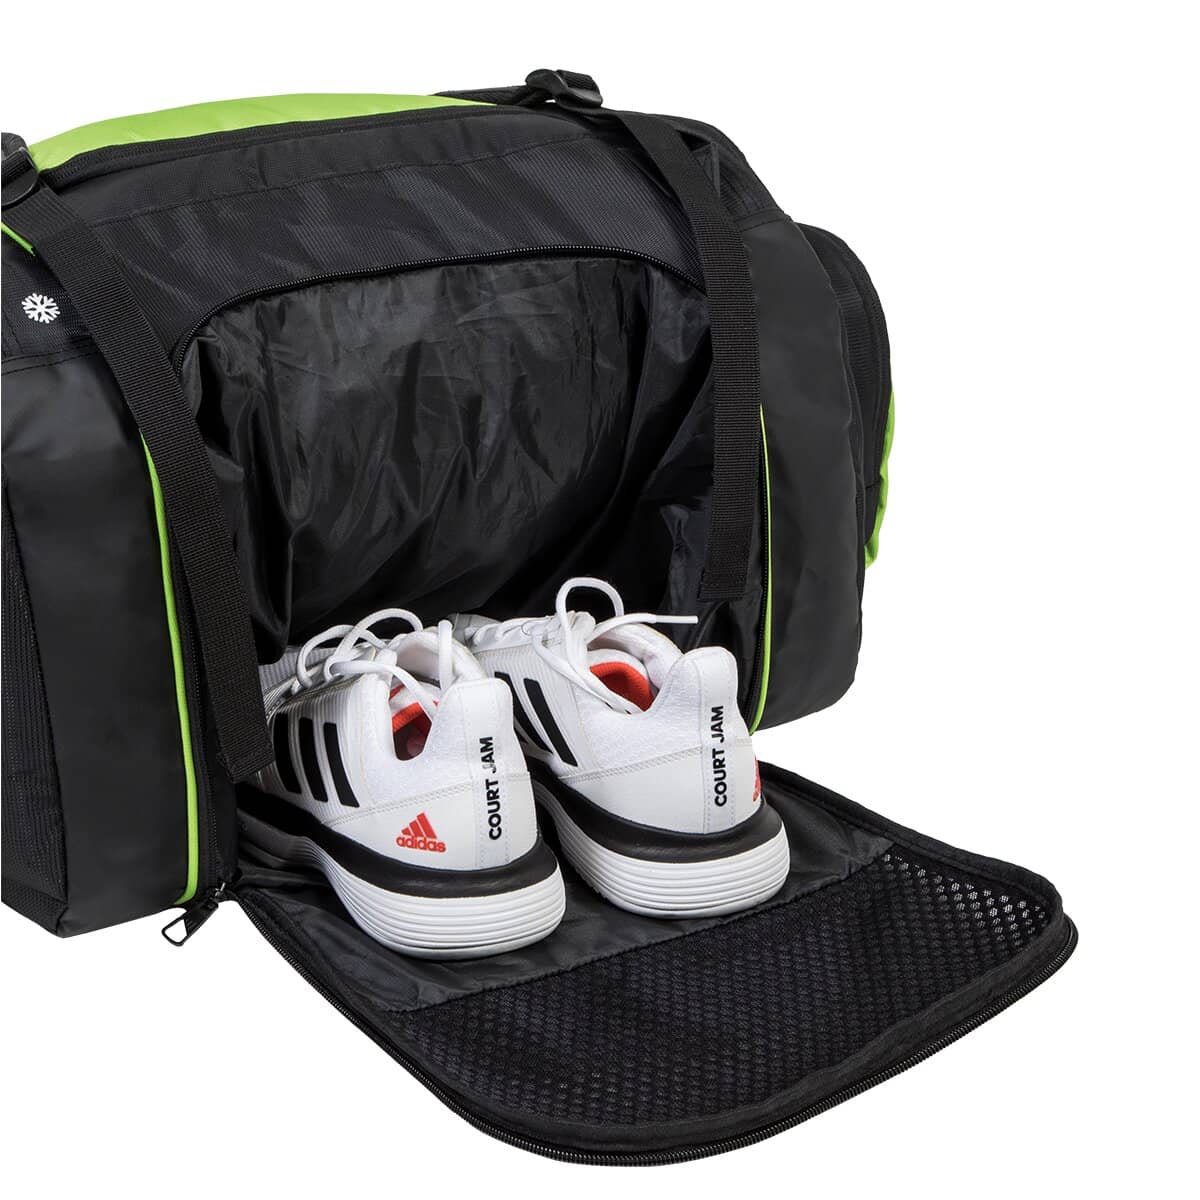 Adidas Pro Tour 3.2 Racket Bag - Lime-Shoes